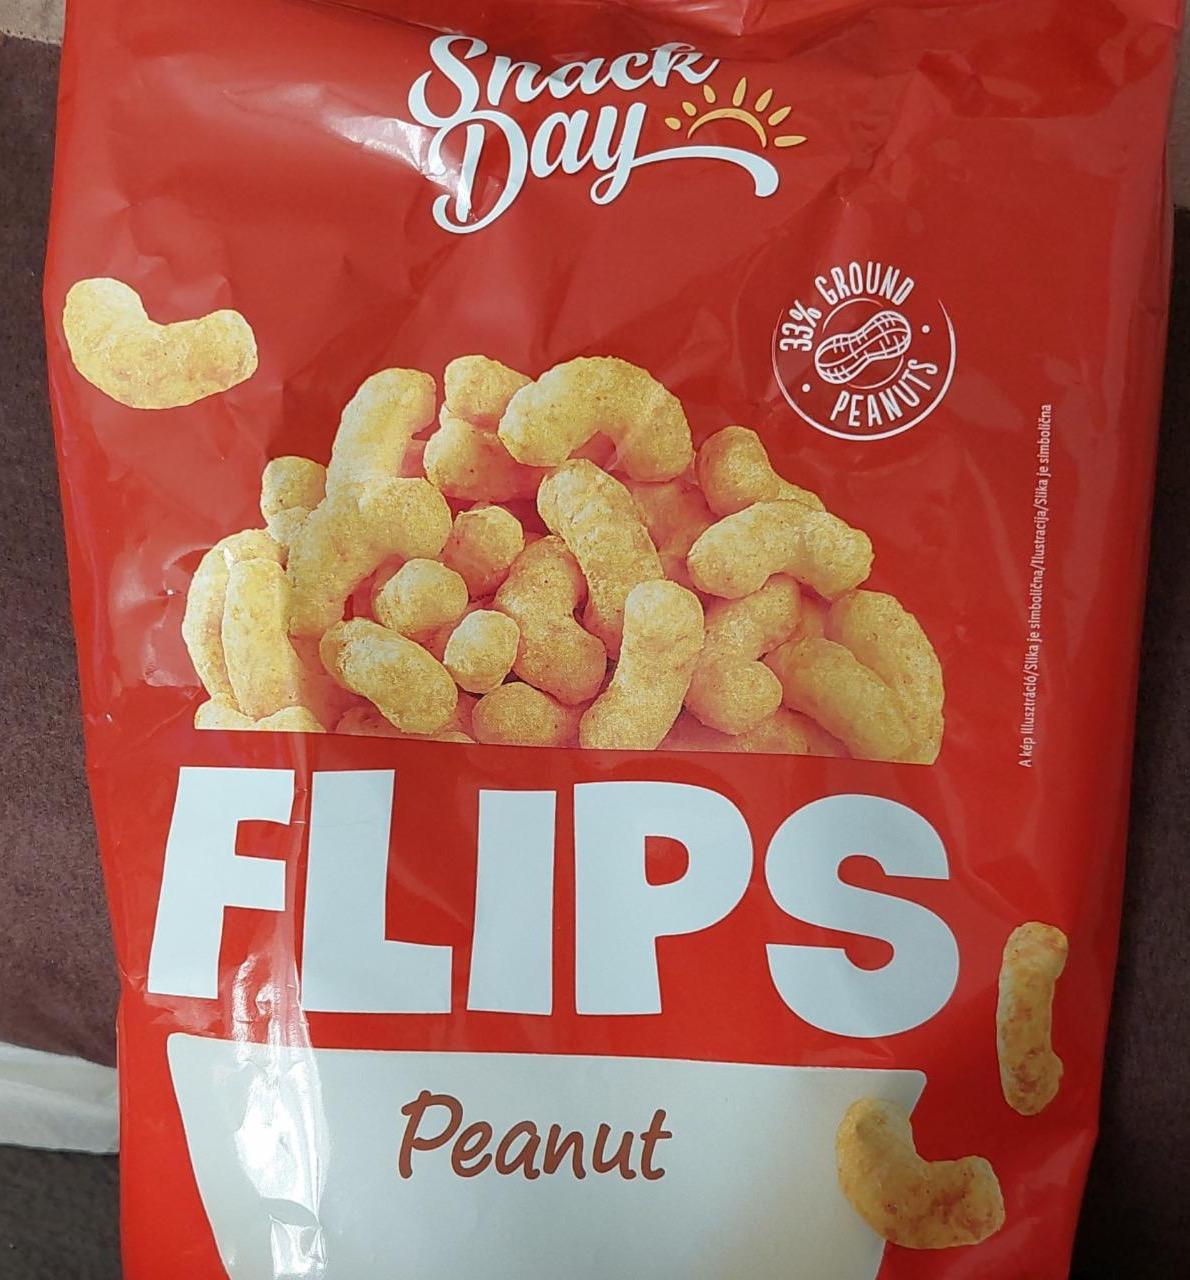 Képek - Flips Peanut extrudált Snack Day